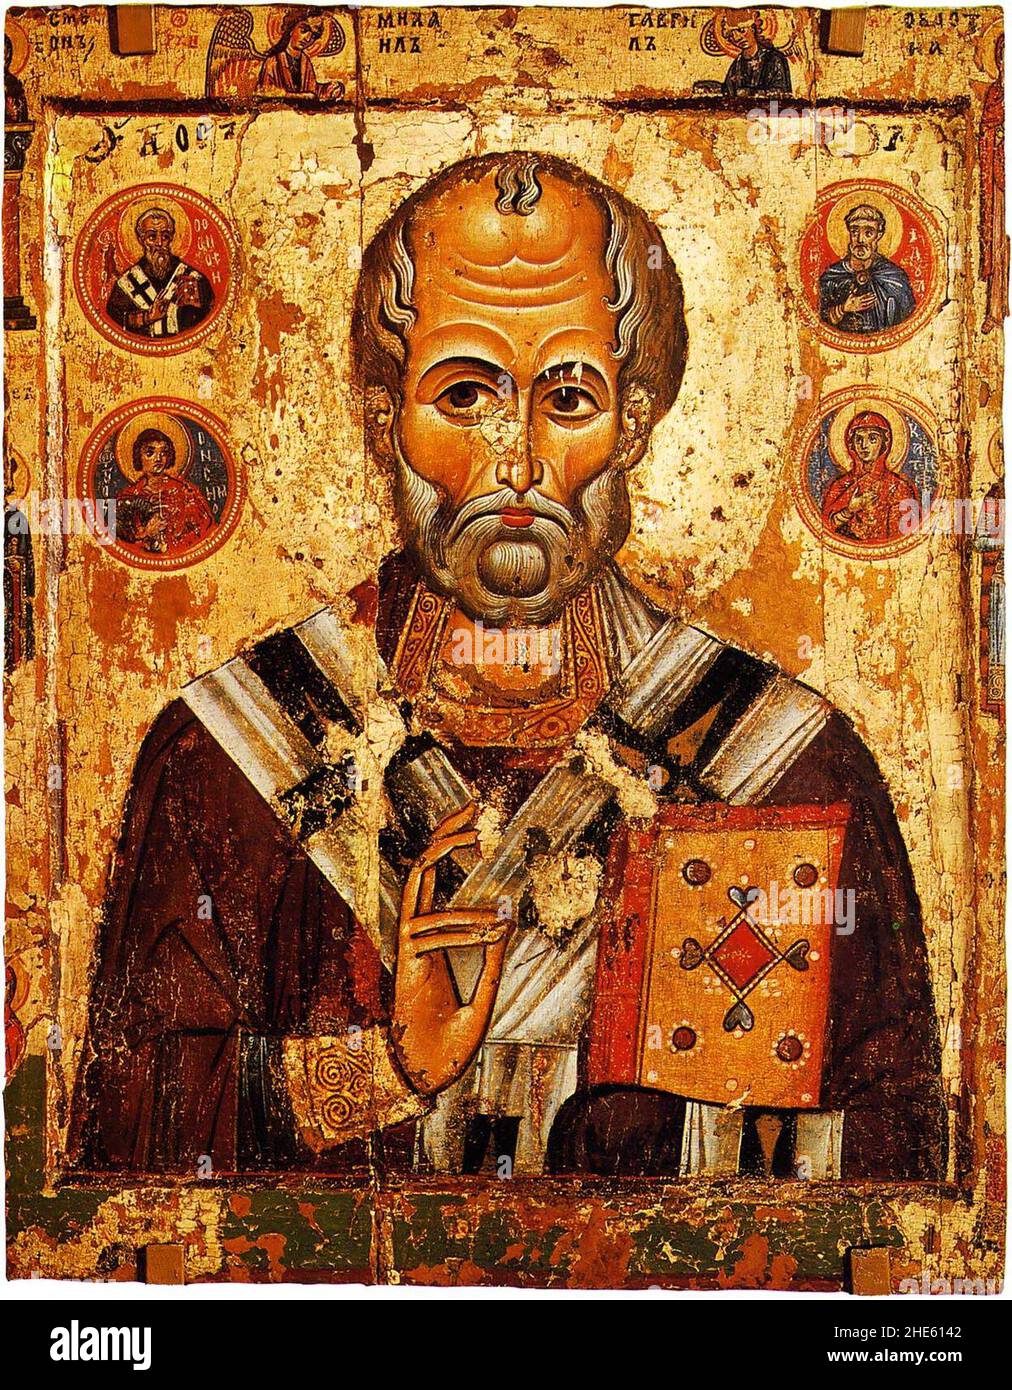 Saint Nikolas XIII c. Stock Photo